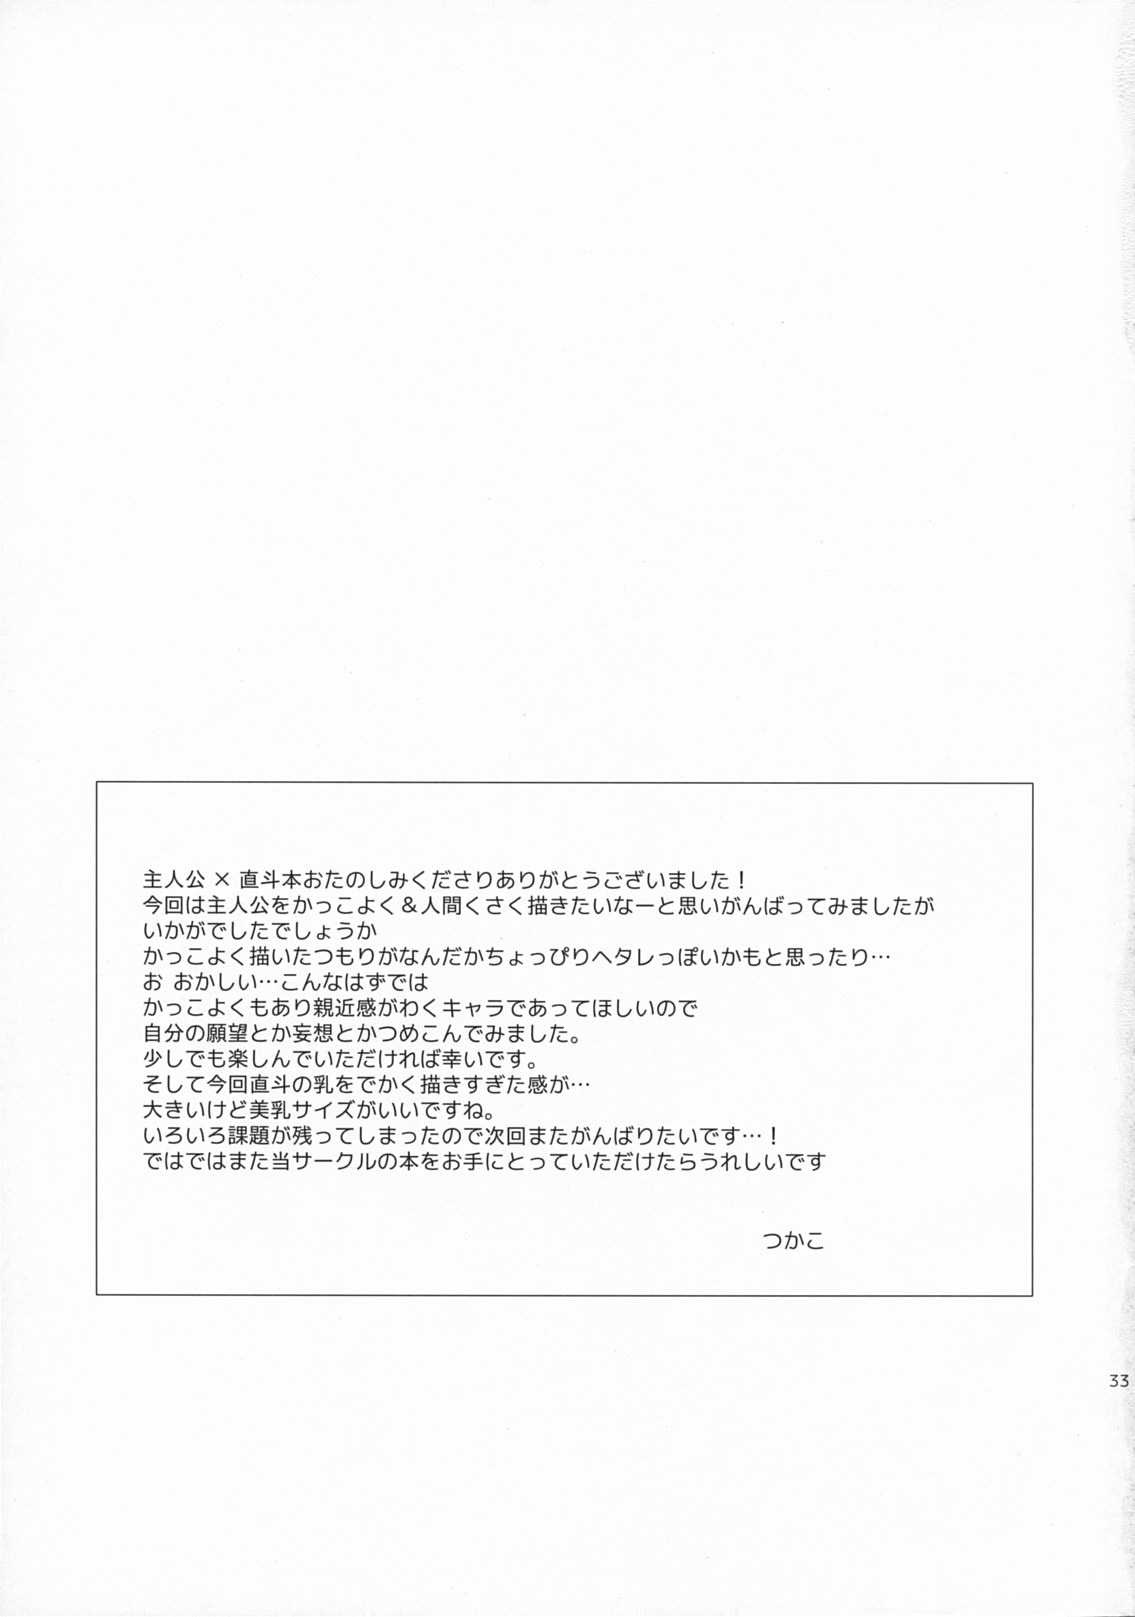 [Kurimomo] SECRET LOVER (Persona 4) (Chinese) (同人誌) [くりもも (つかこ)] SECRET LOVER  (ペルソナ4) (清純突破漢化組)